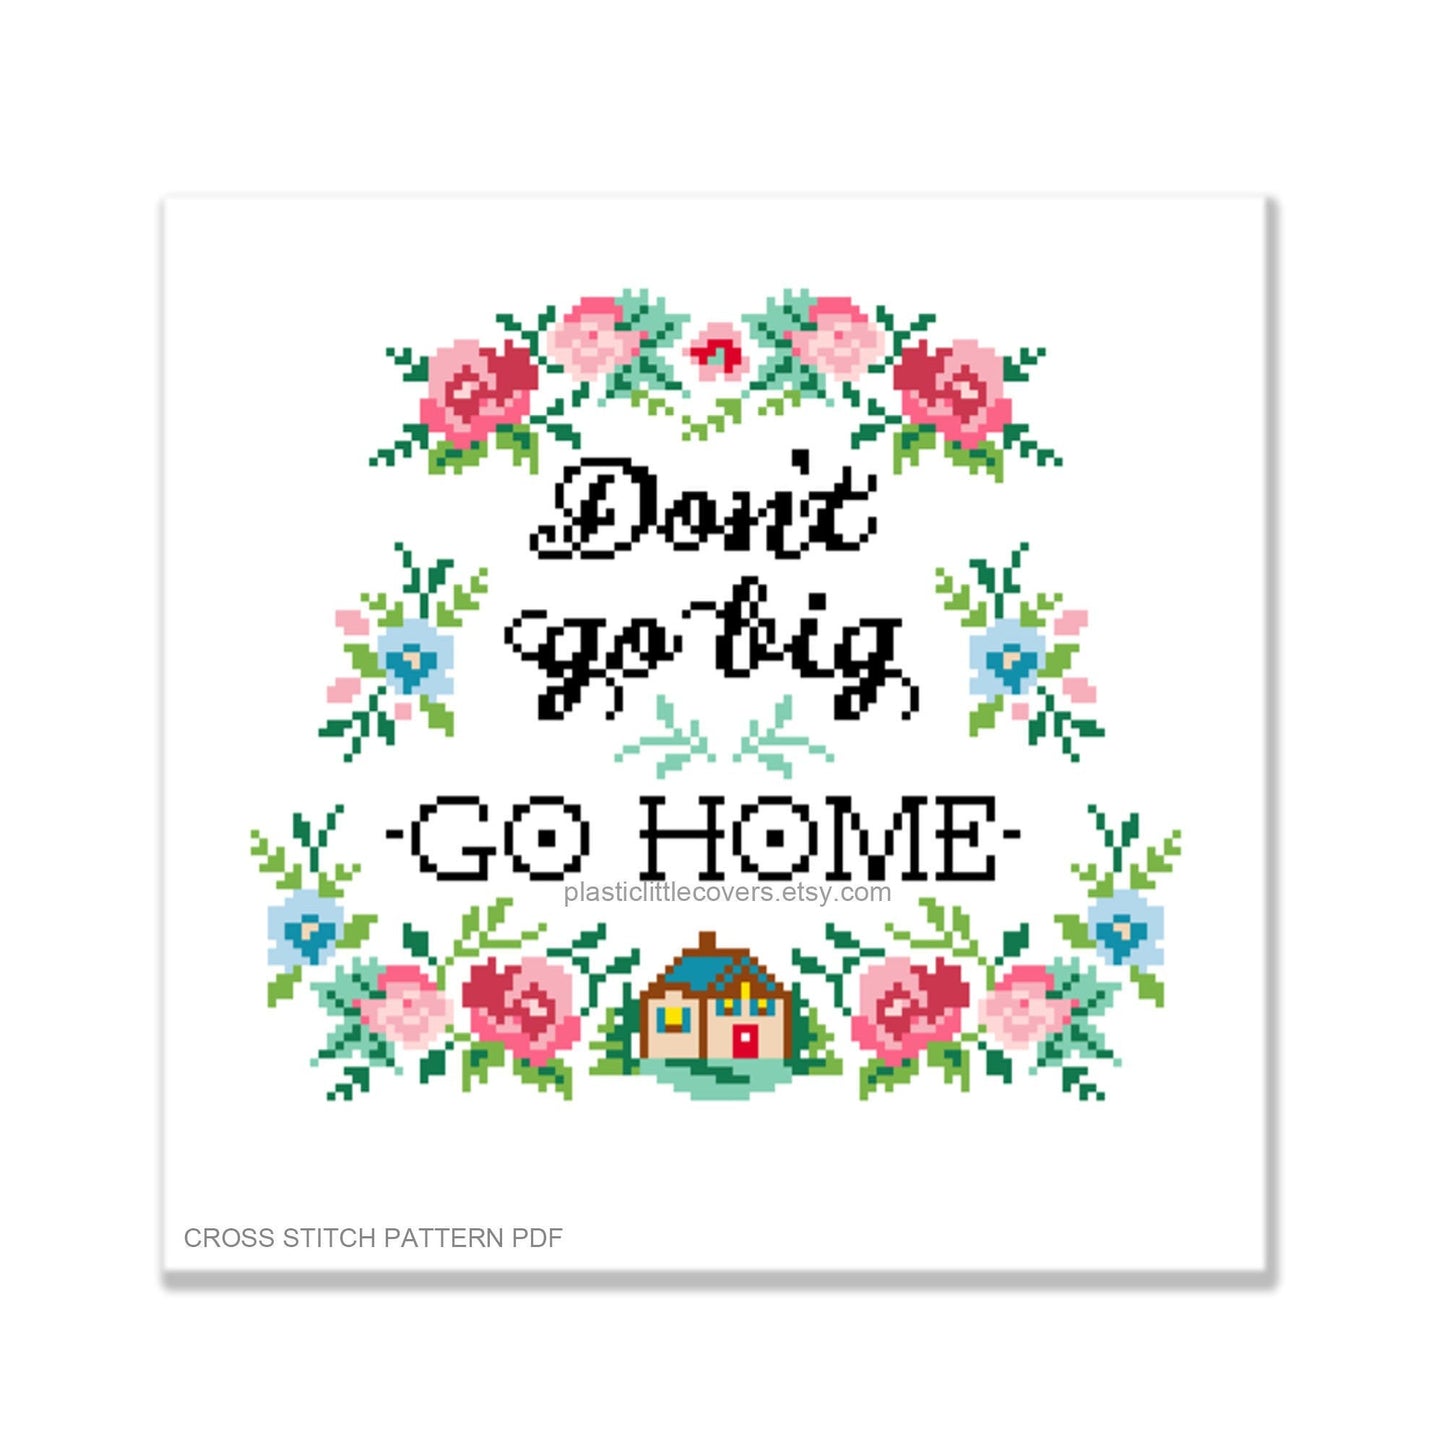 Don't Go Big, Go Home - Cross Stitch Pattern PDF.